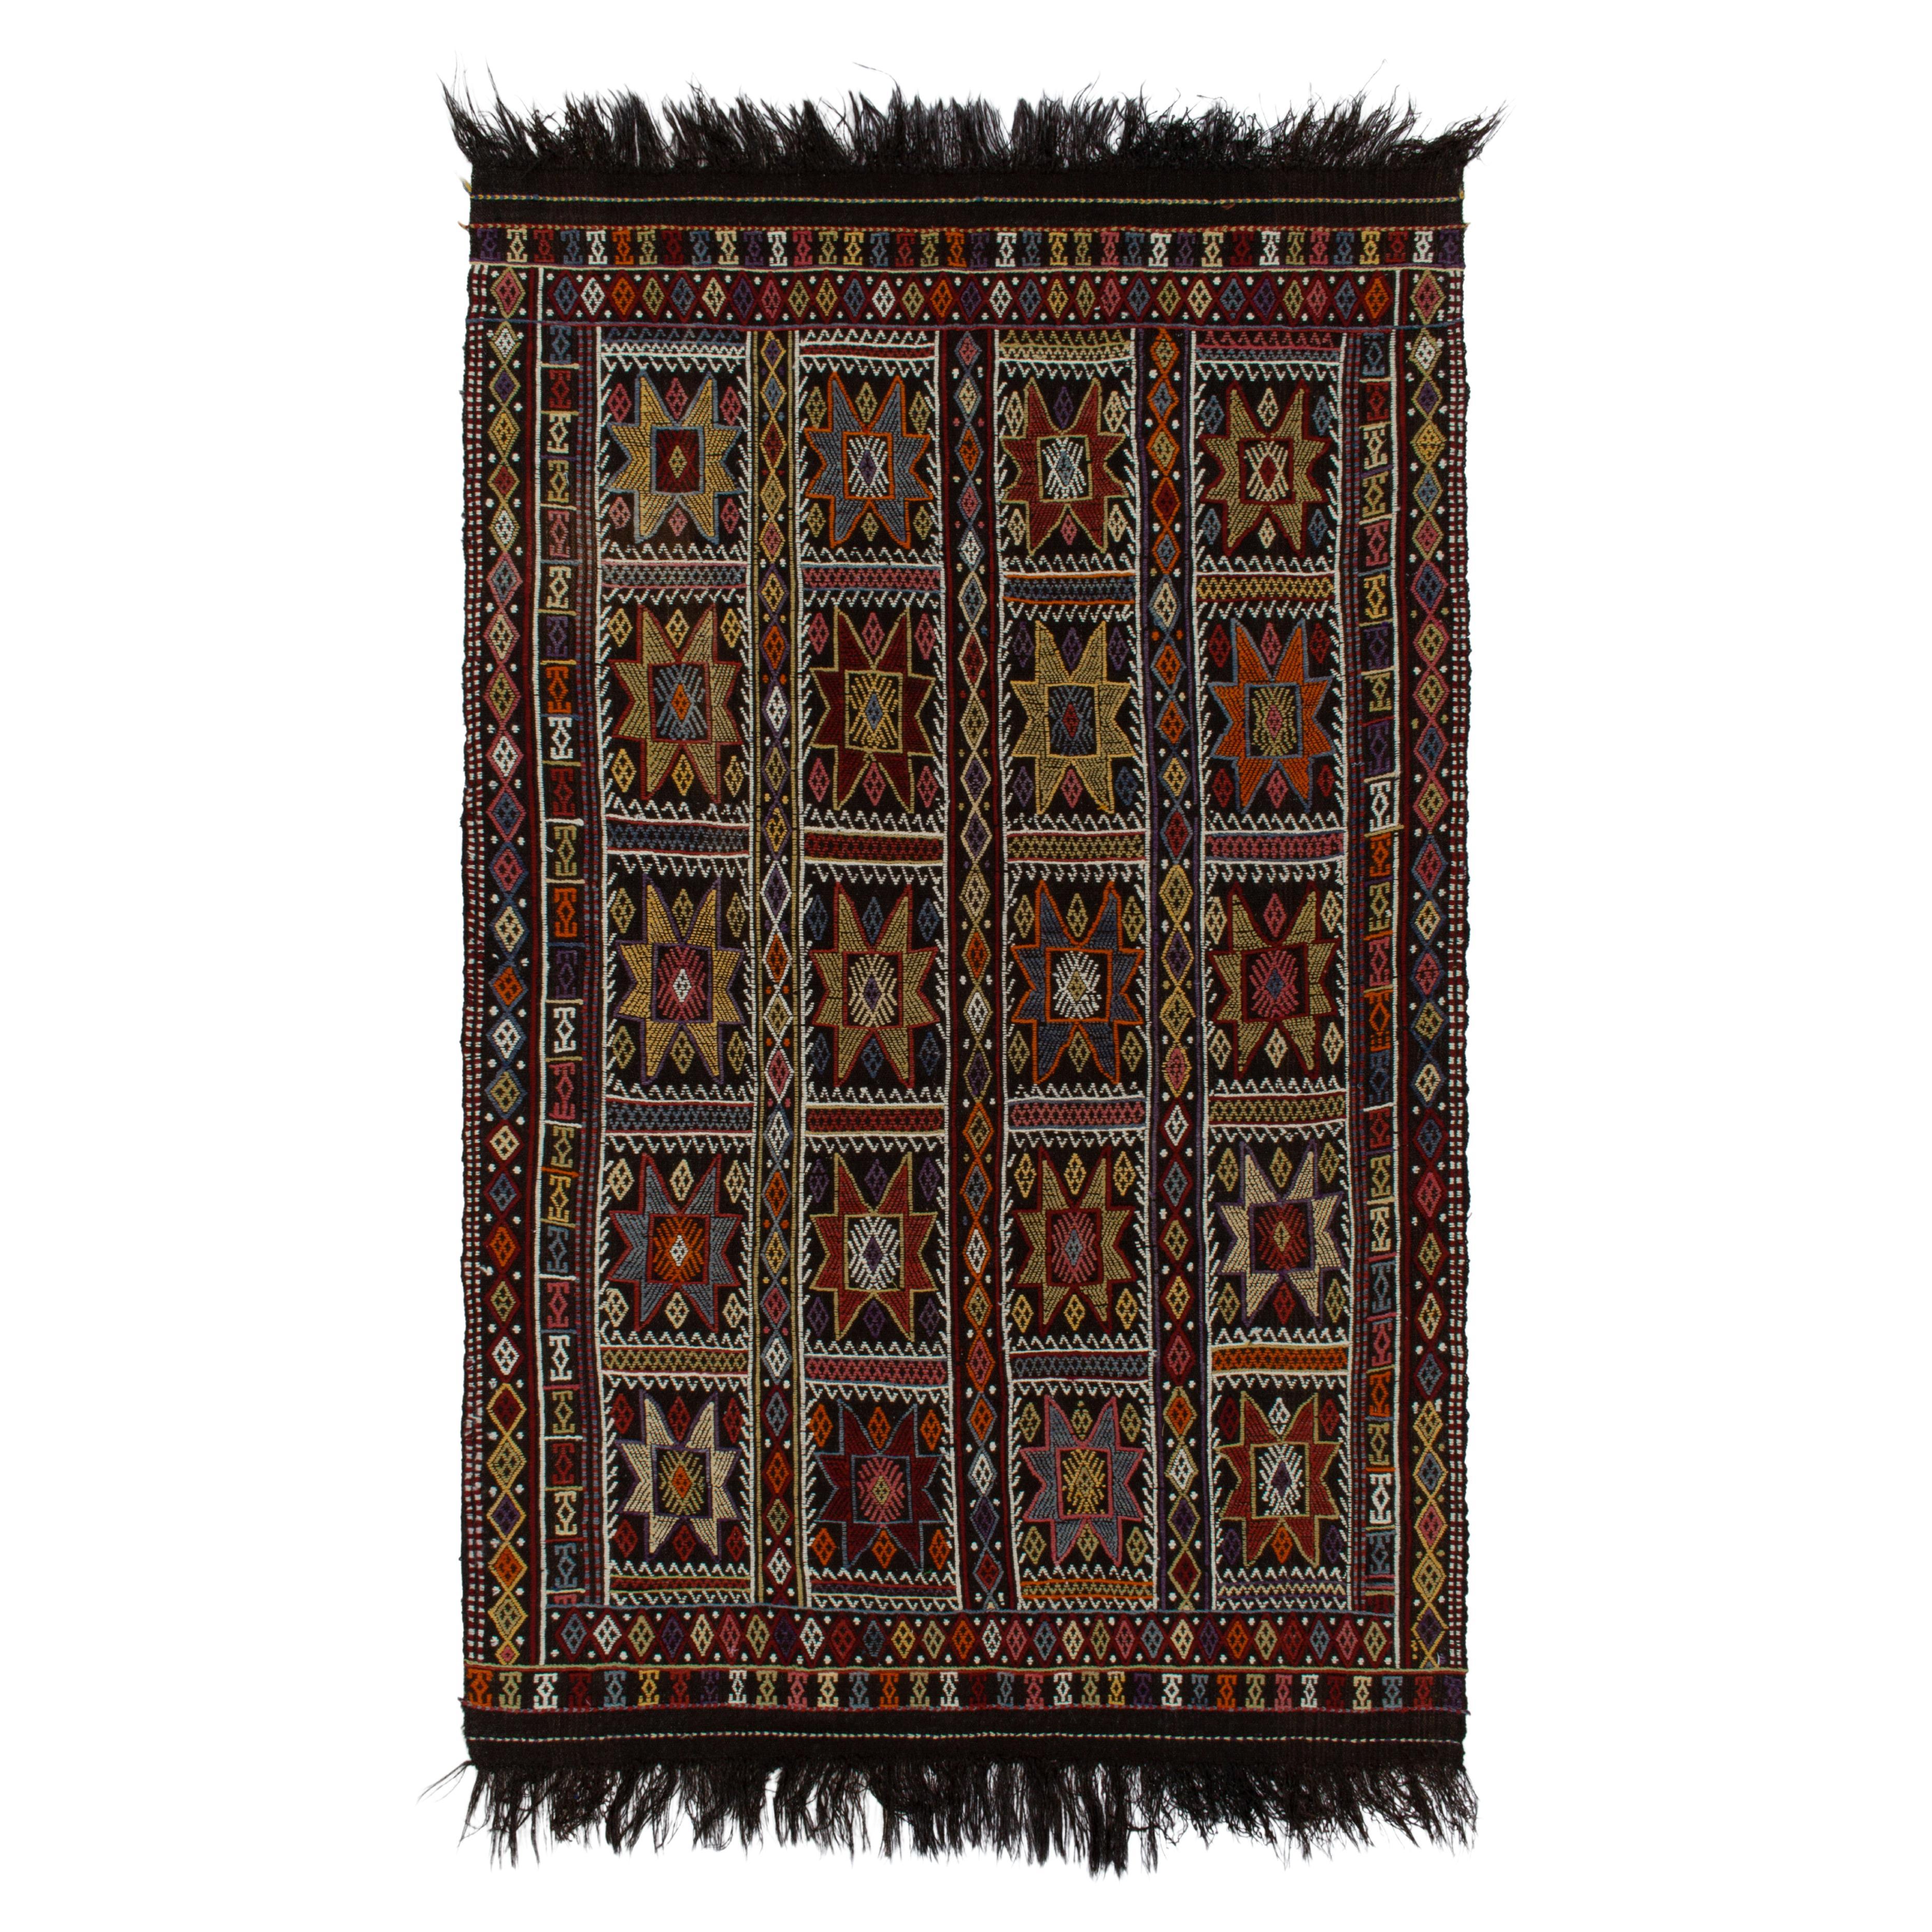 1950s Vintage Kilim Tribal Rug in Black, Multicolor Geometric by Rug & Kilim